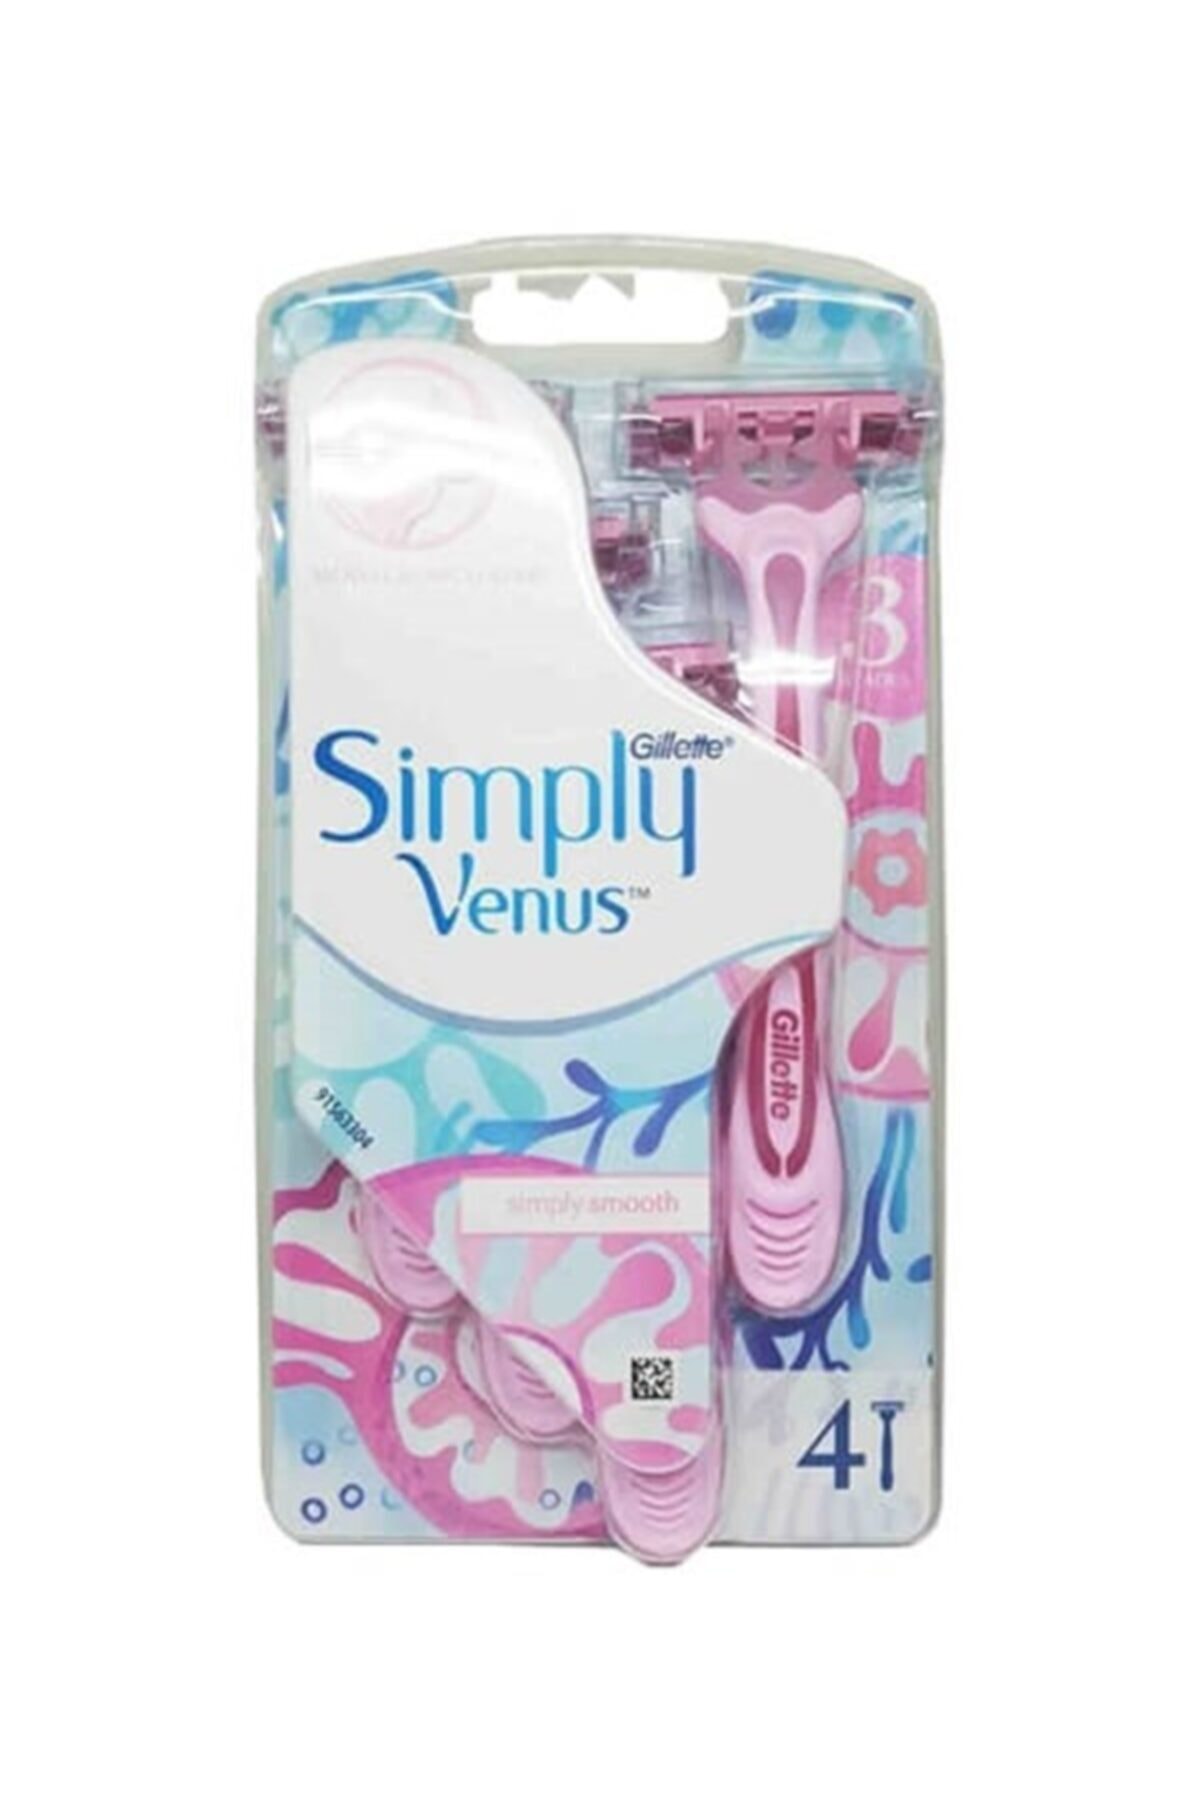 Gillette Venus Simply Venus 3 Kullan At Kadın Tıraş Bıçağı 4'lü